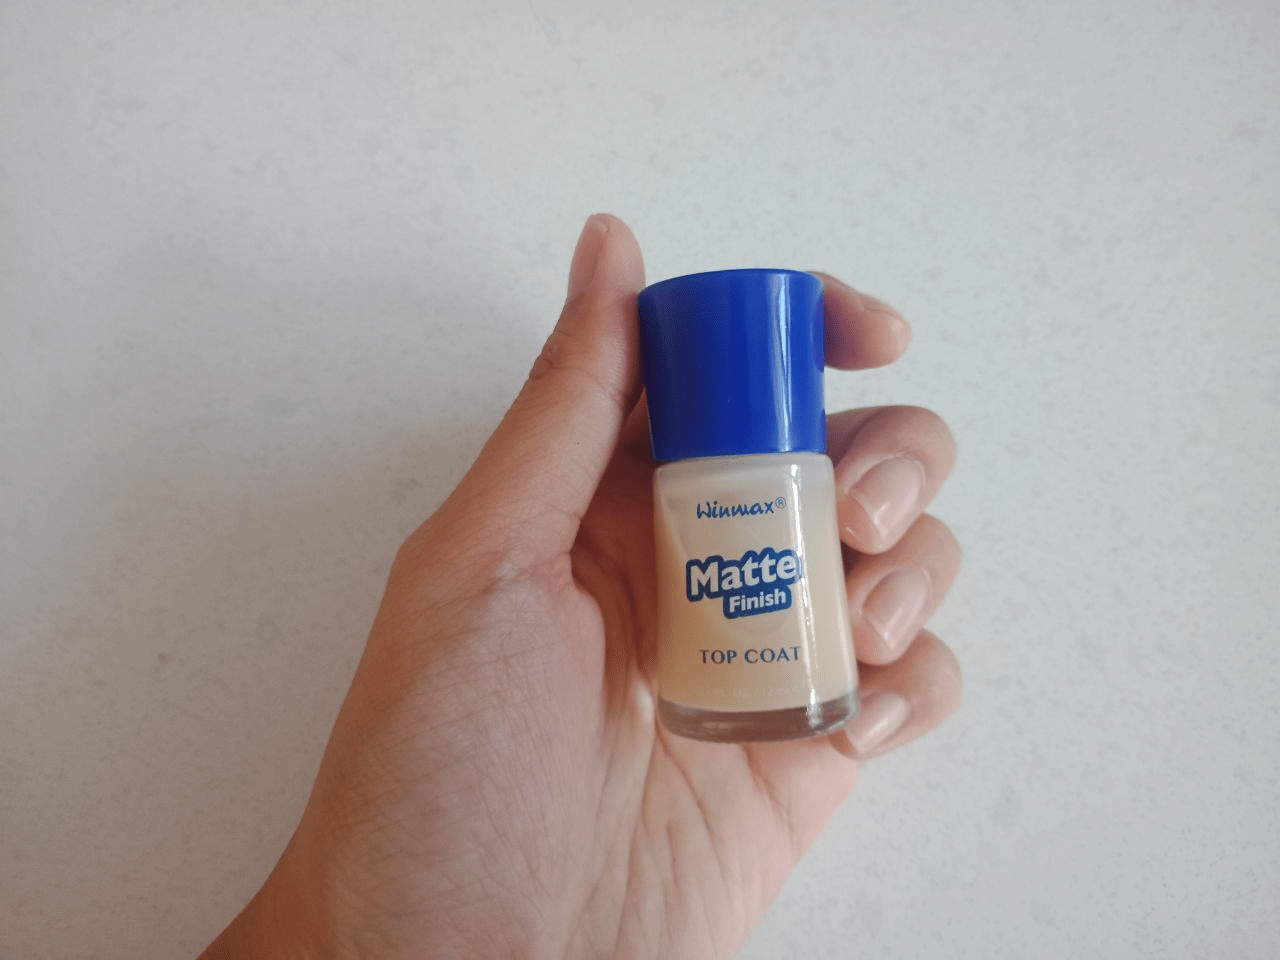 Matte nail polish topcoat Daiso Singapore